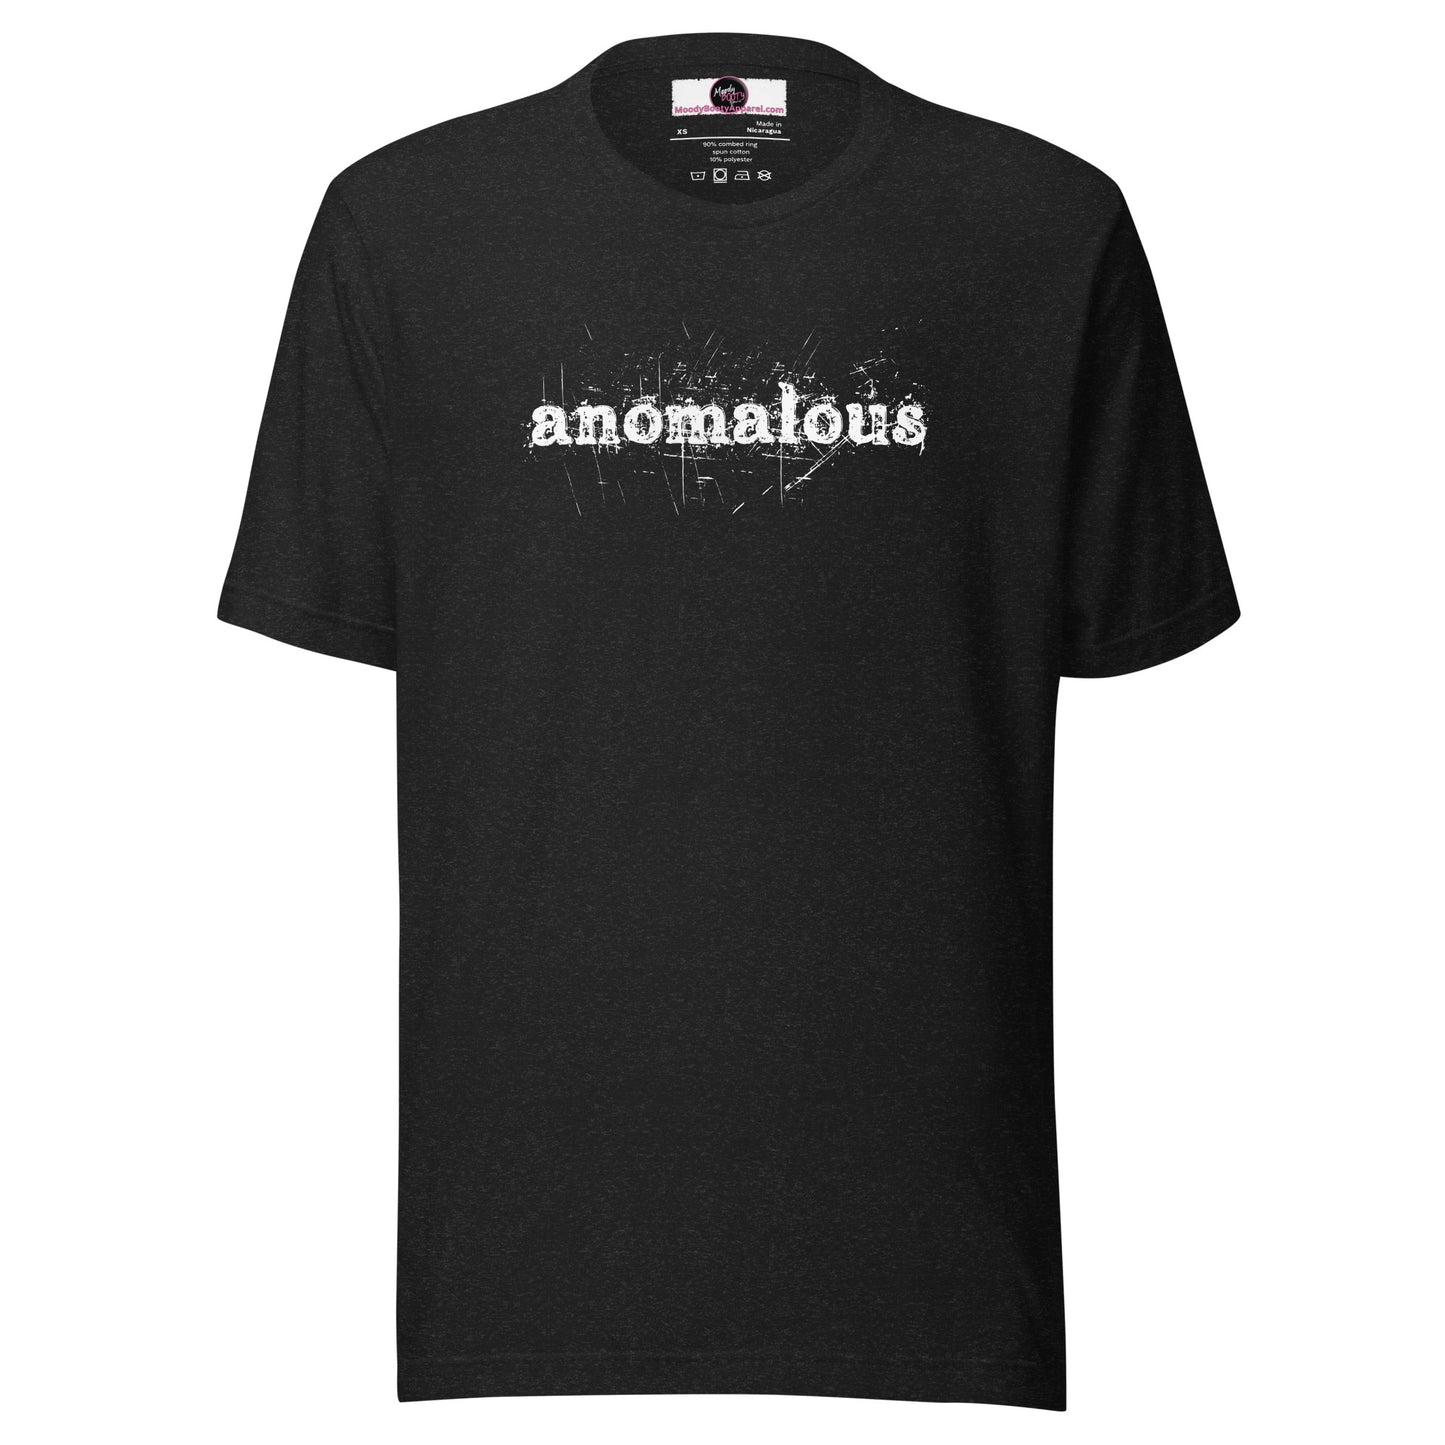 Anomalous - Unisex t-shirt